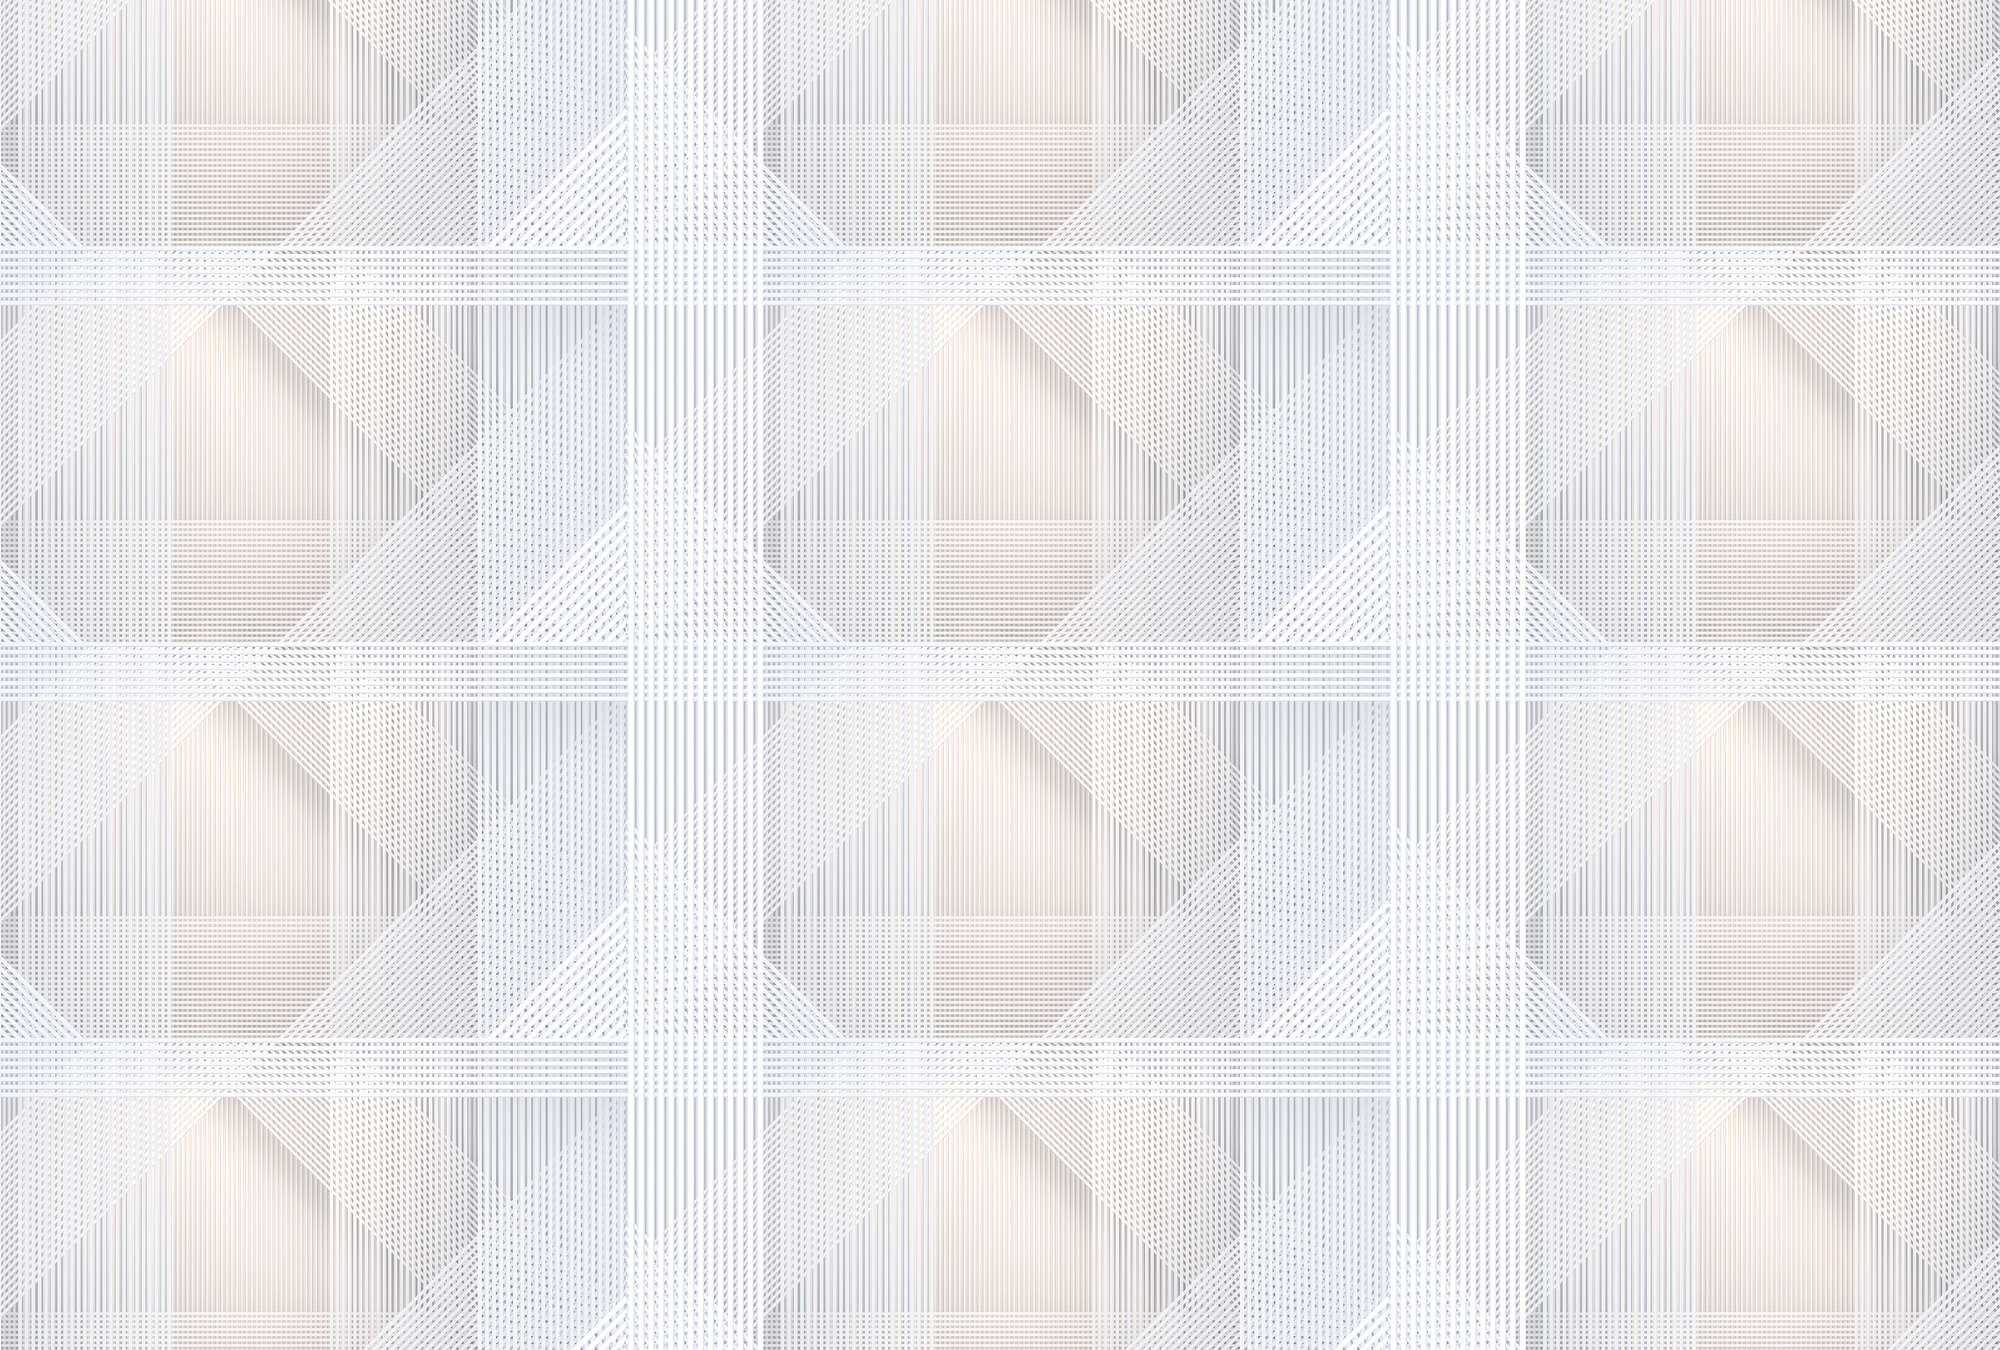             Strings 1 - wallpaper geometric stripe pattern - grey, orange | texture non-woven
        